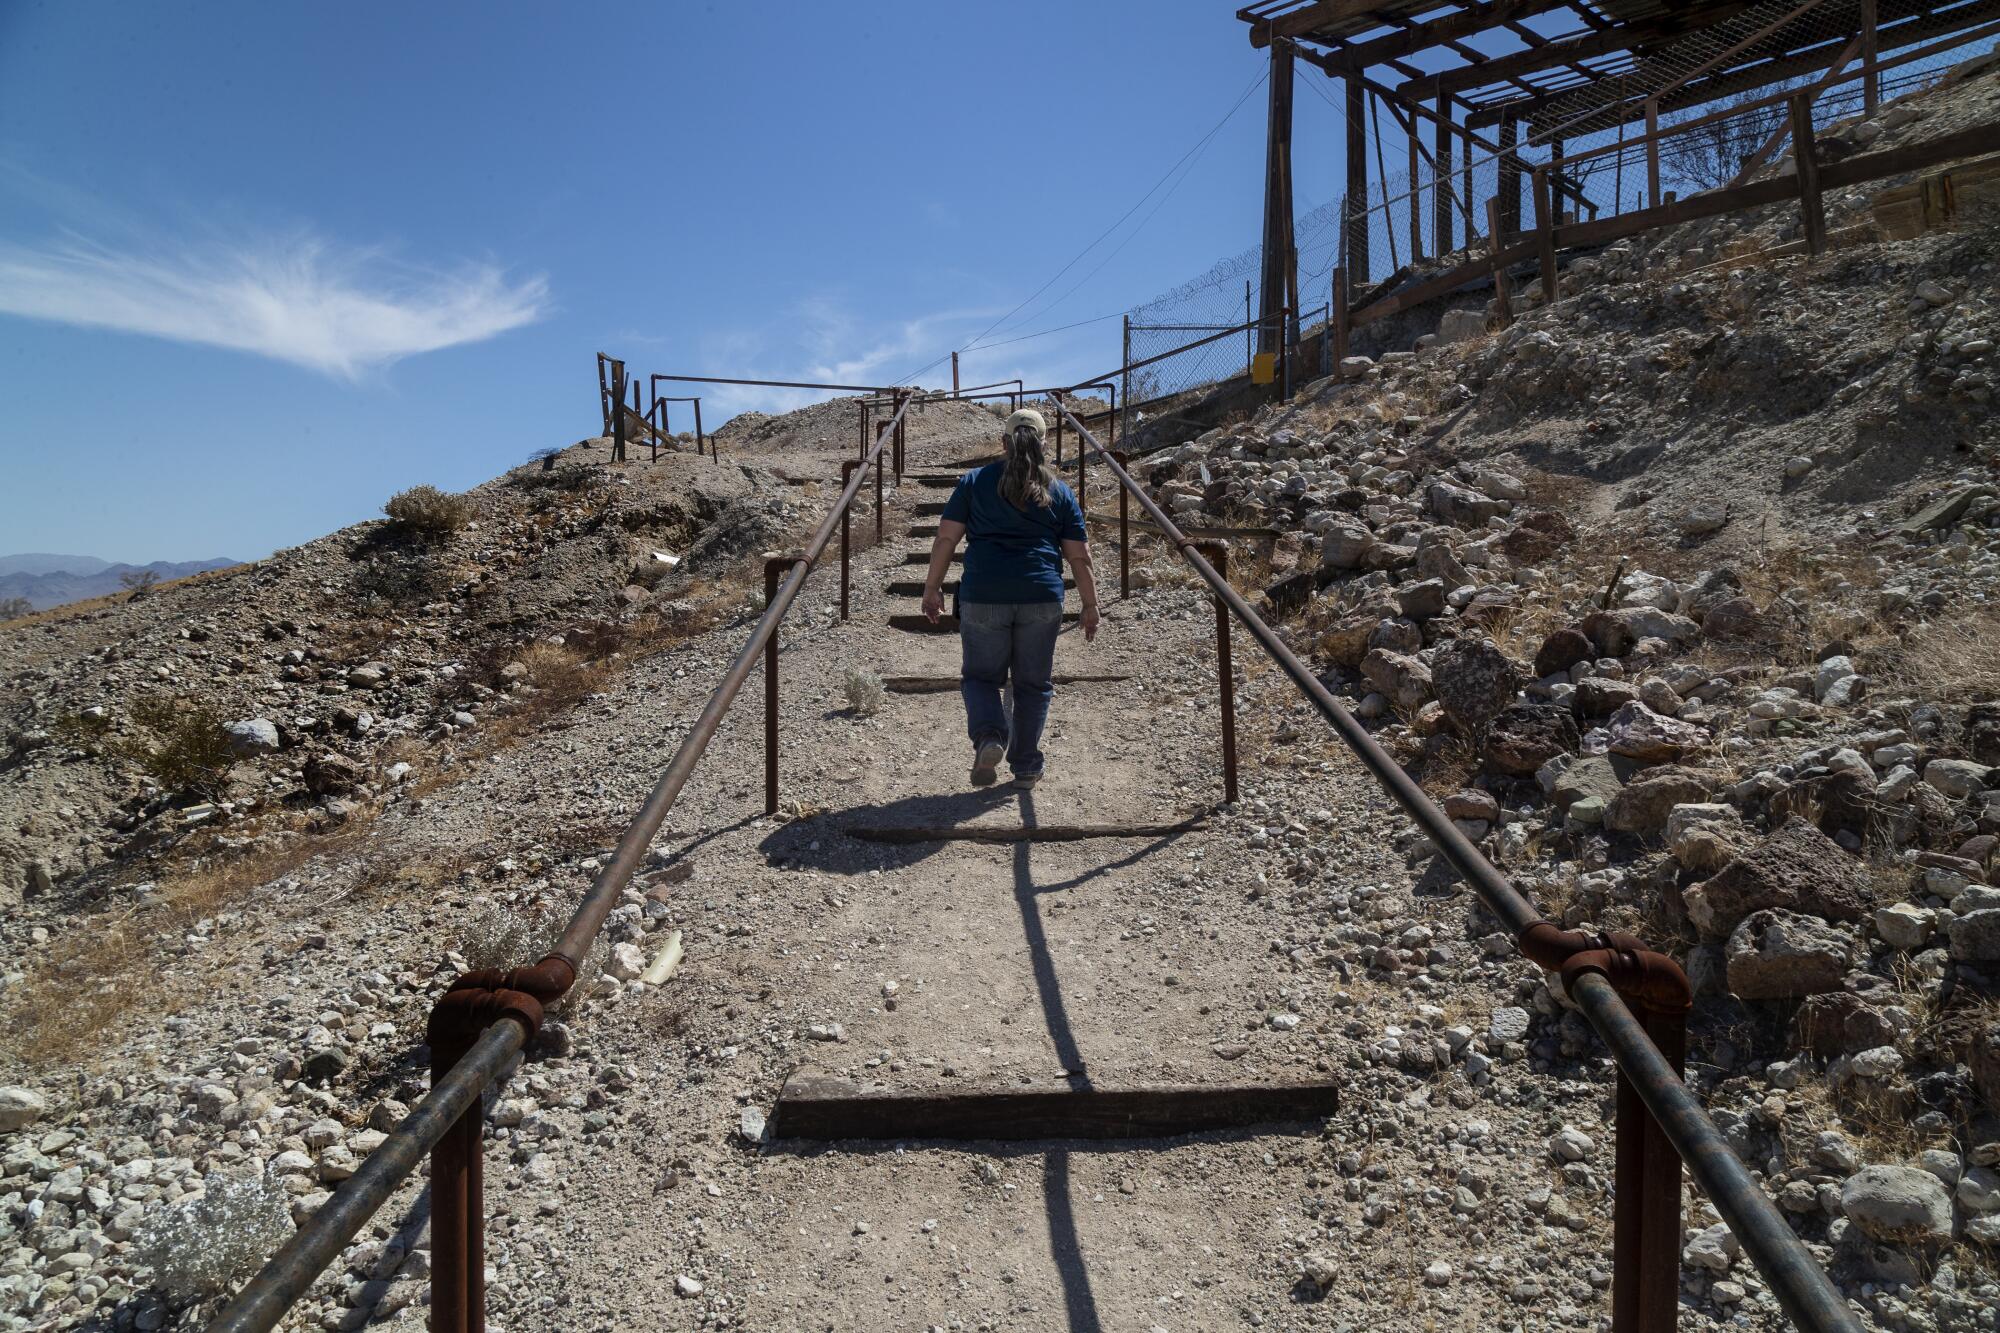 A woman walks up a dirt path between metal railings.